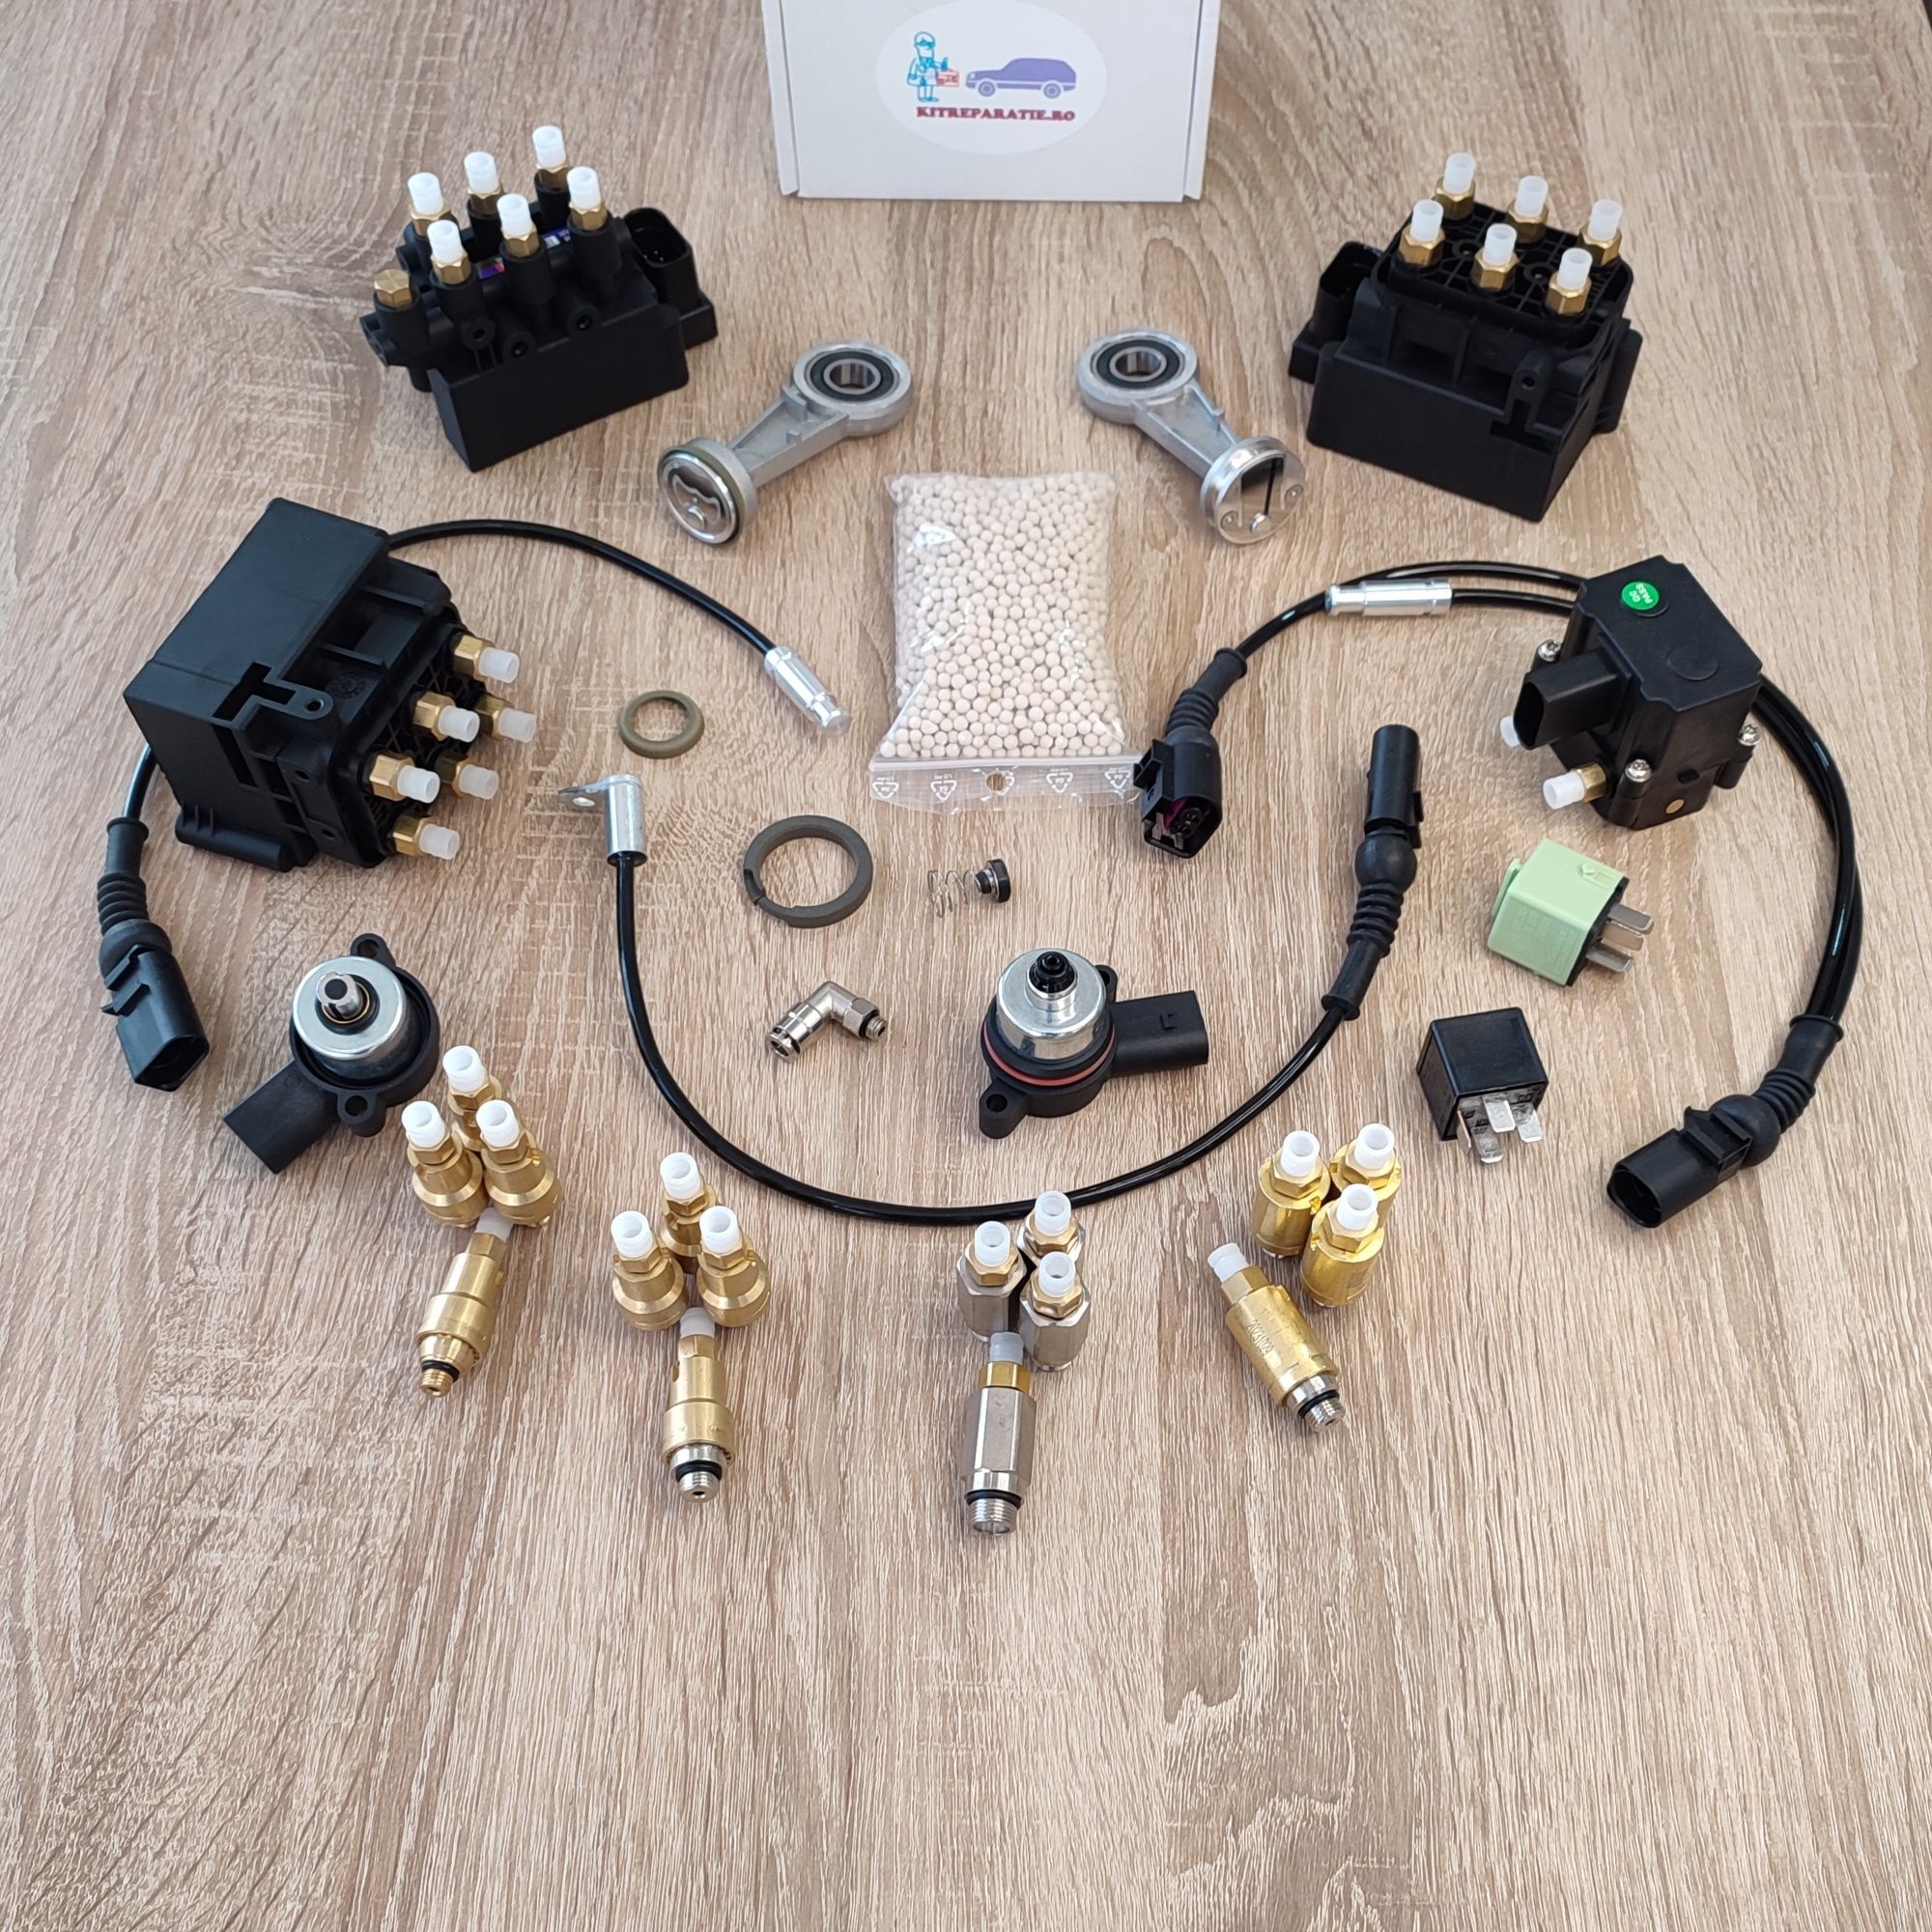 Kit reparatie Compresor perne Touareg, Audi Q7 A8 A6, L322, bloc valve